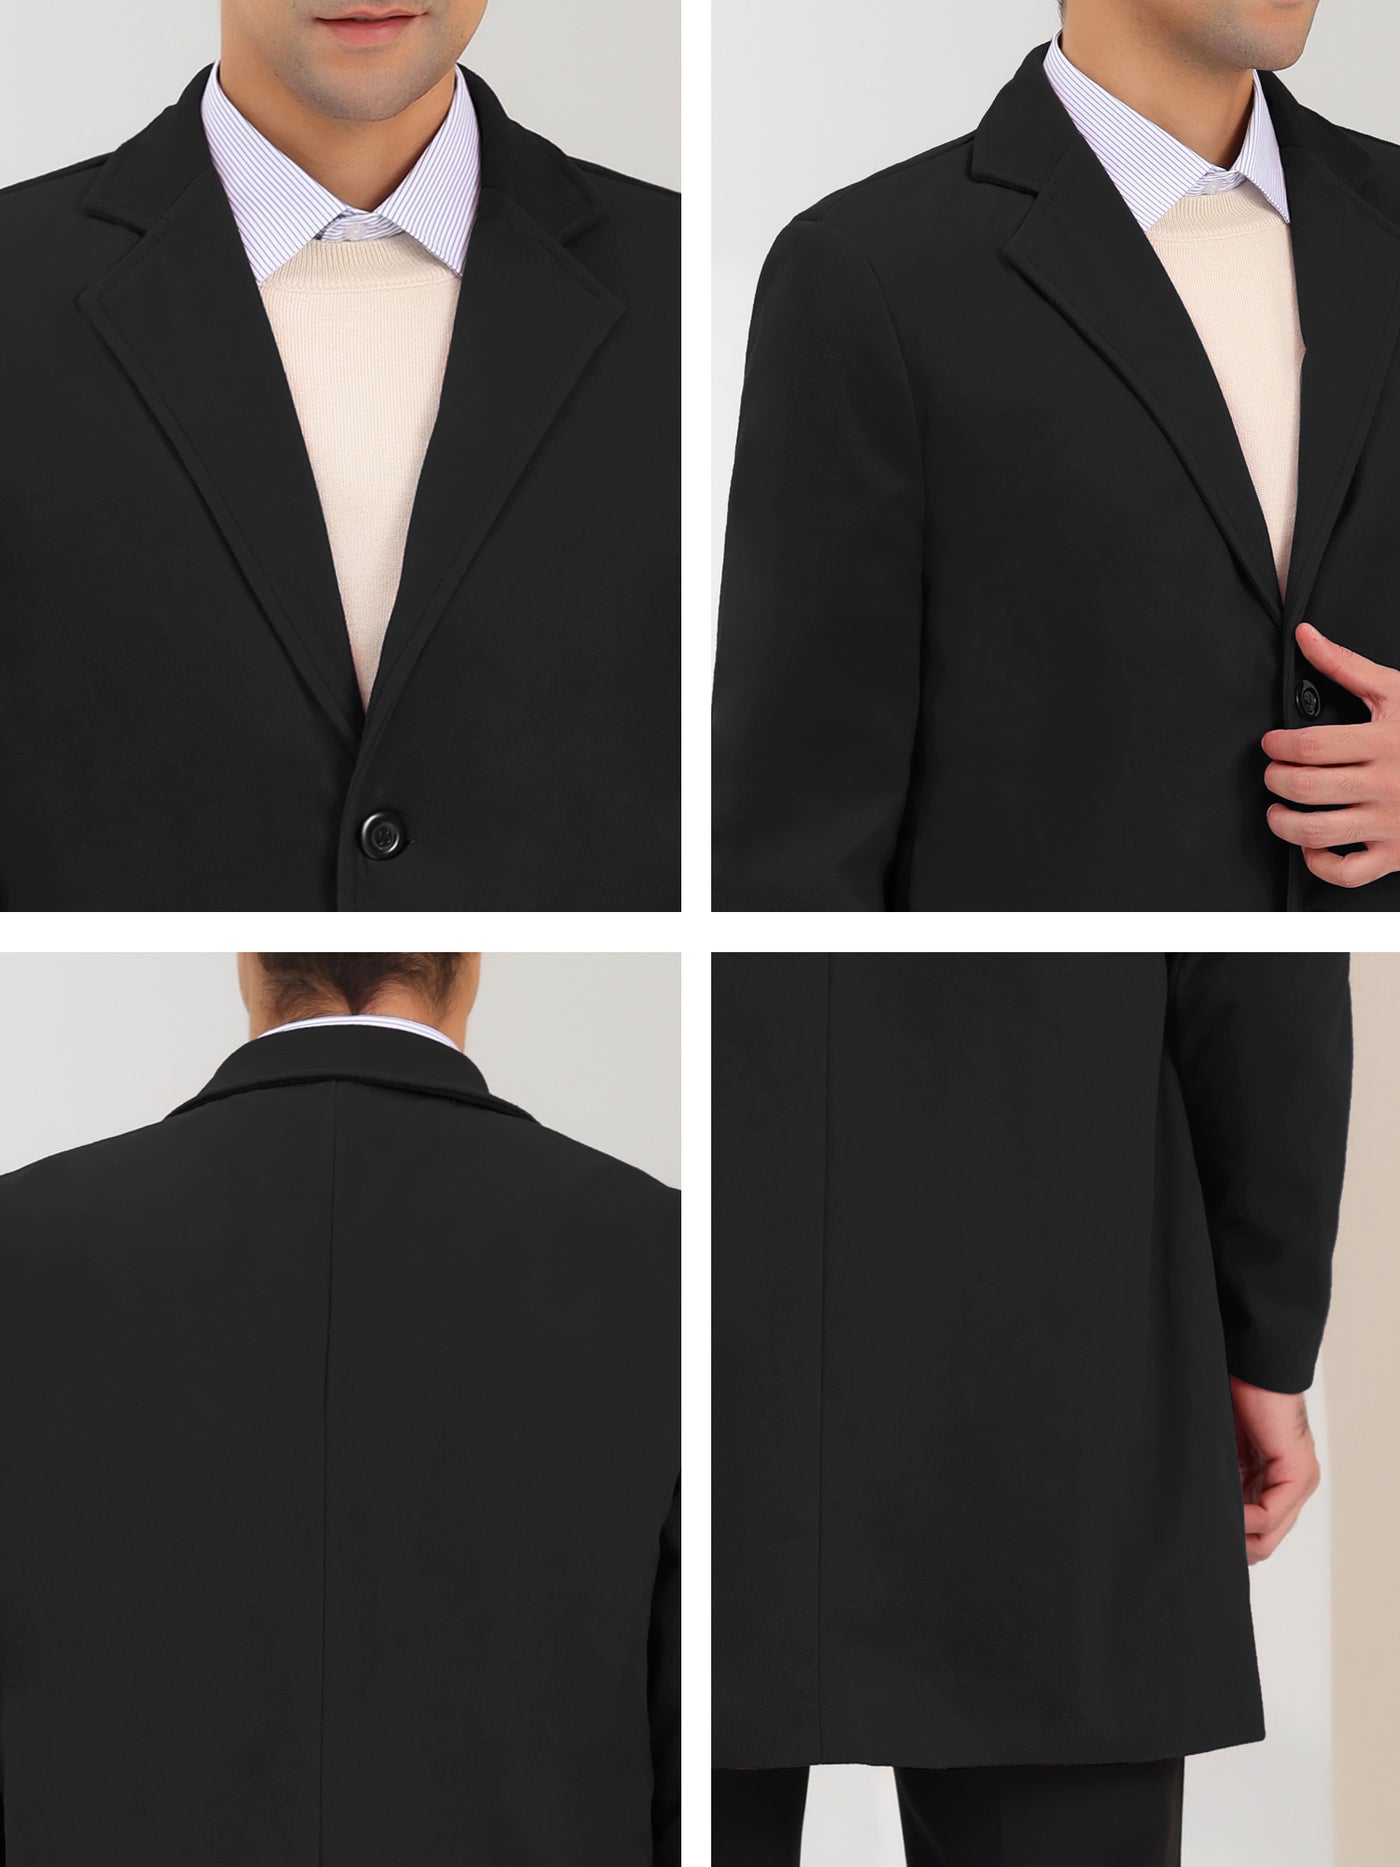 Bublédon Men's Trench Coat Notch Lapel Single Breasted Classic Long Pea Coats Overcoat